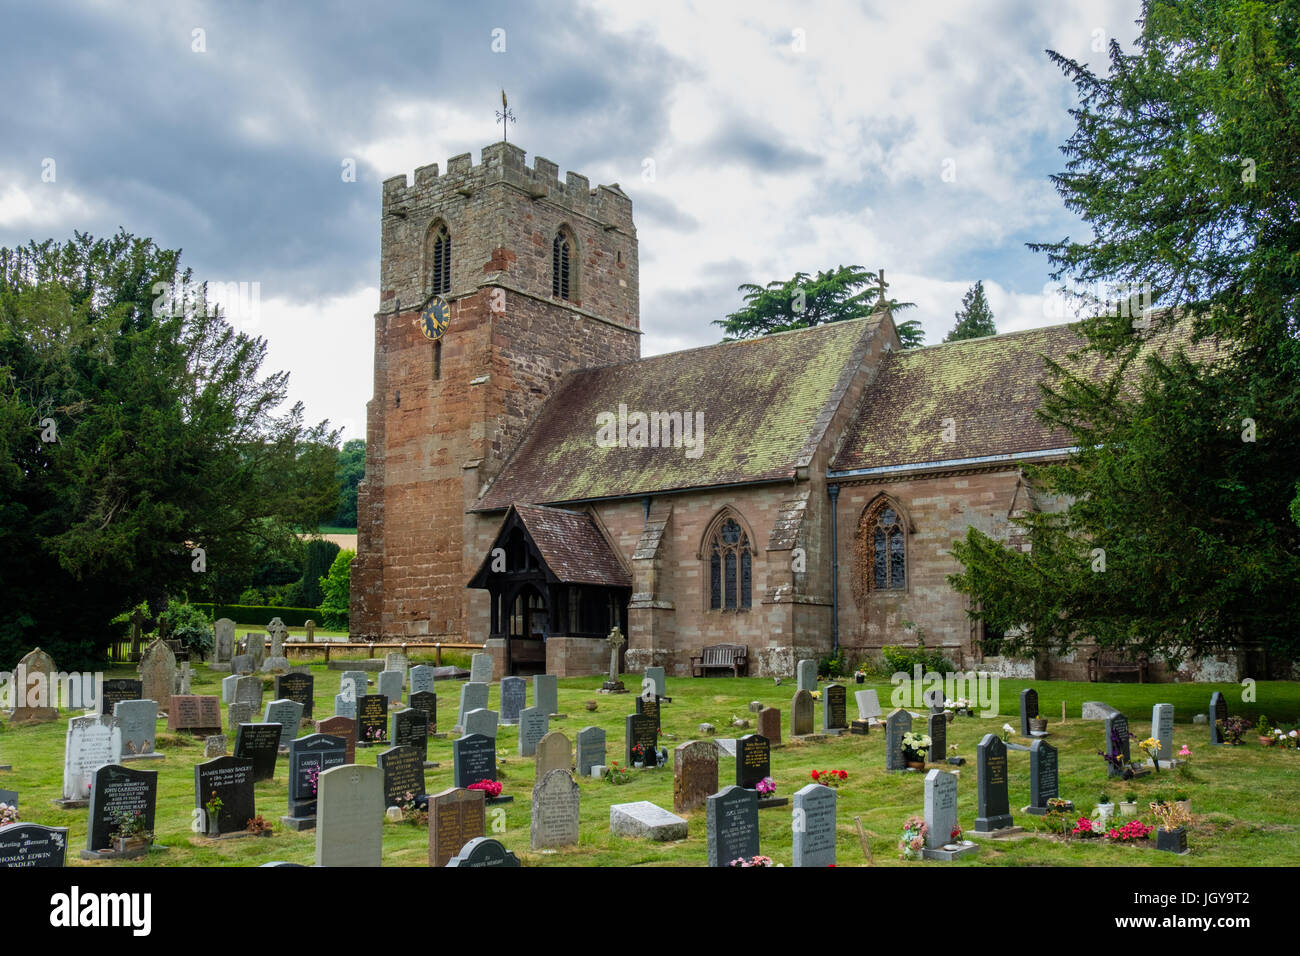 St John the Baptist Church, Eastnor, Ledbury, Herefordshire, Angleterre, RU Banque D'Images